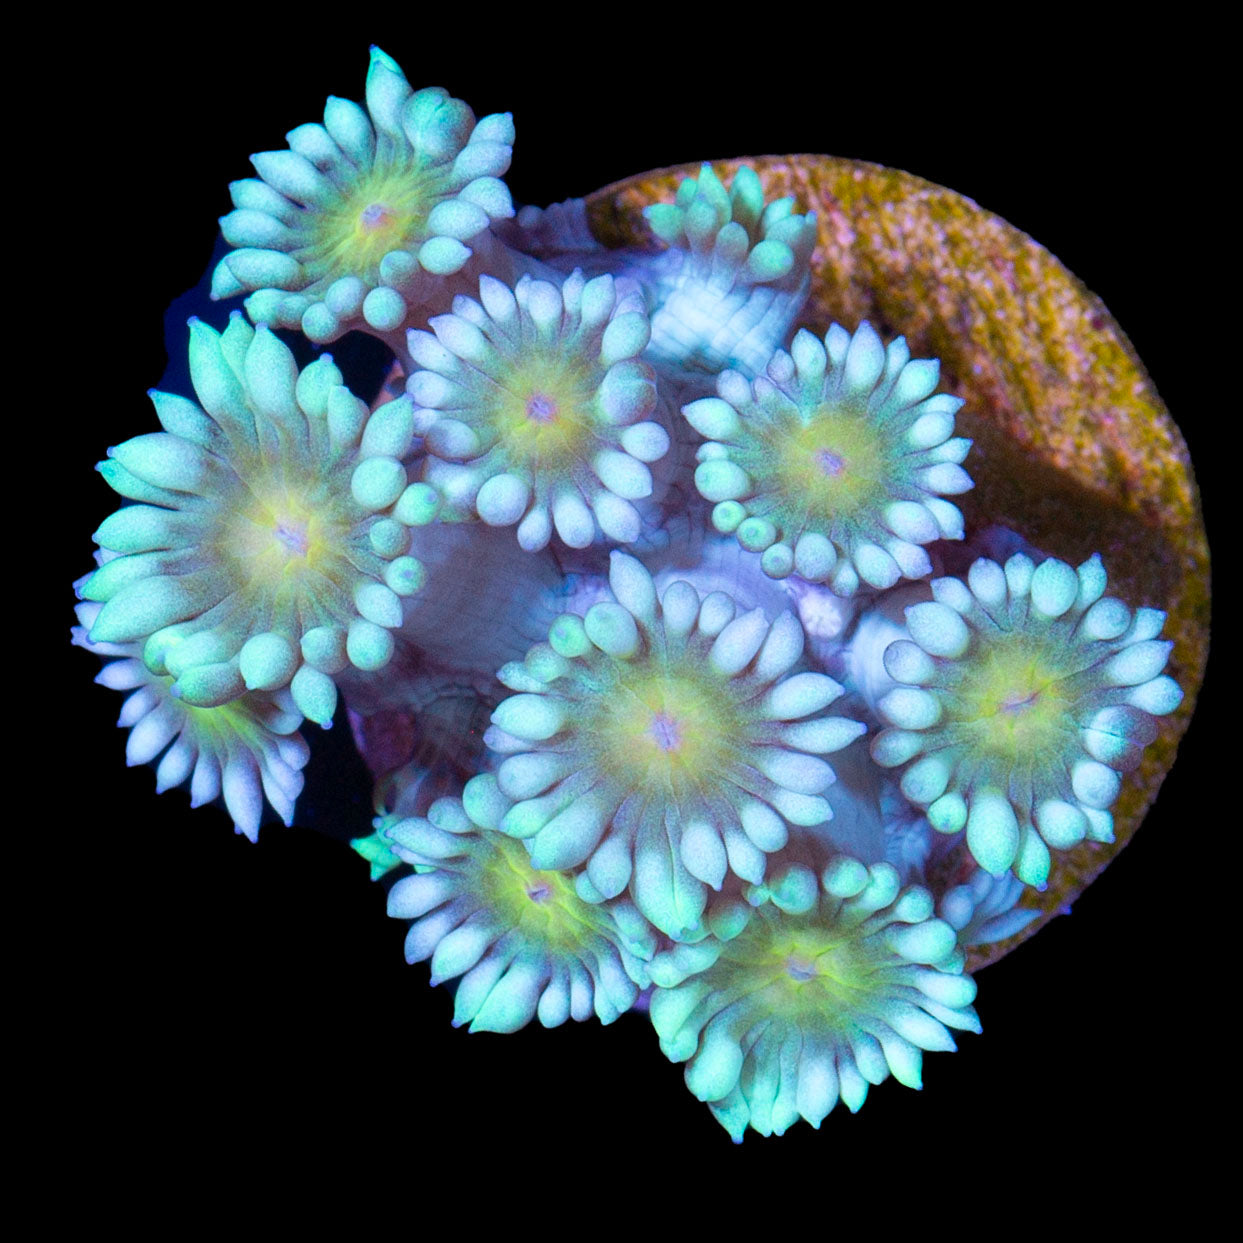 Ultra Yellow Eye Goniopora Coral